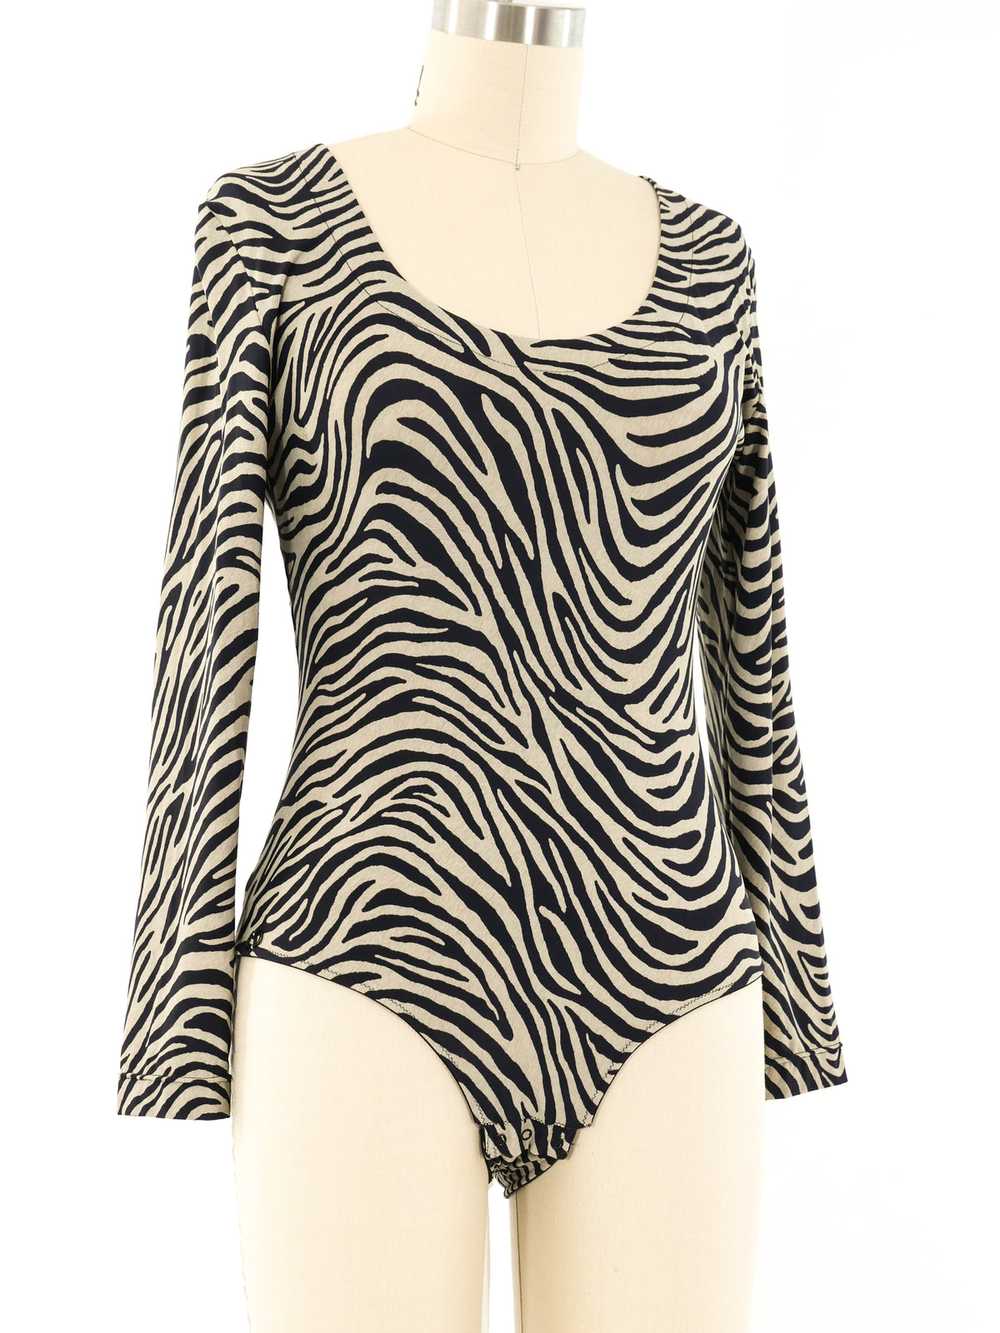 Christian Dior Zebra Print Bodysuit - image 3